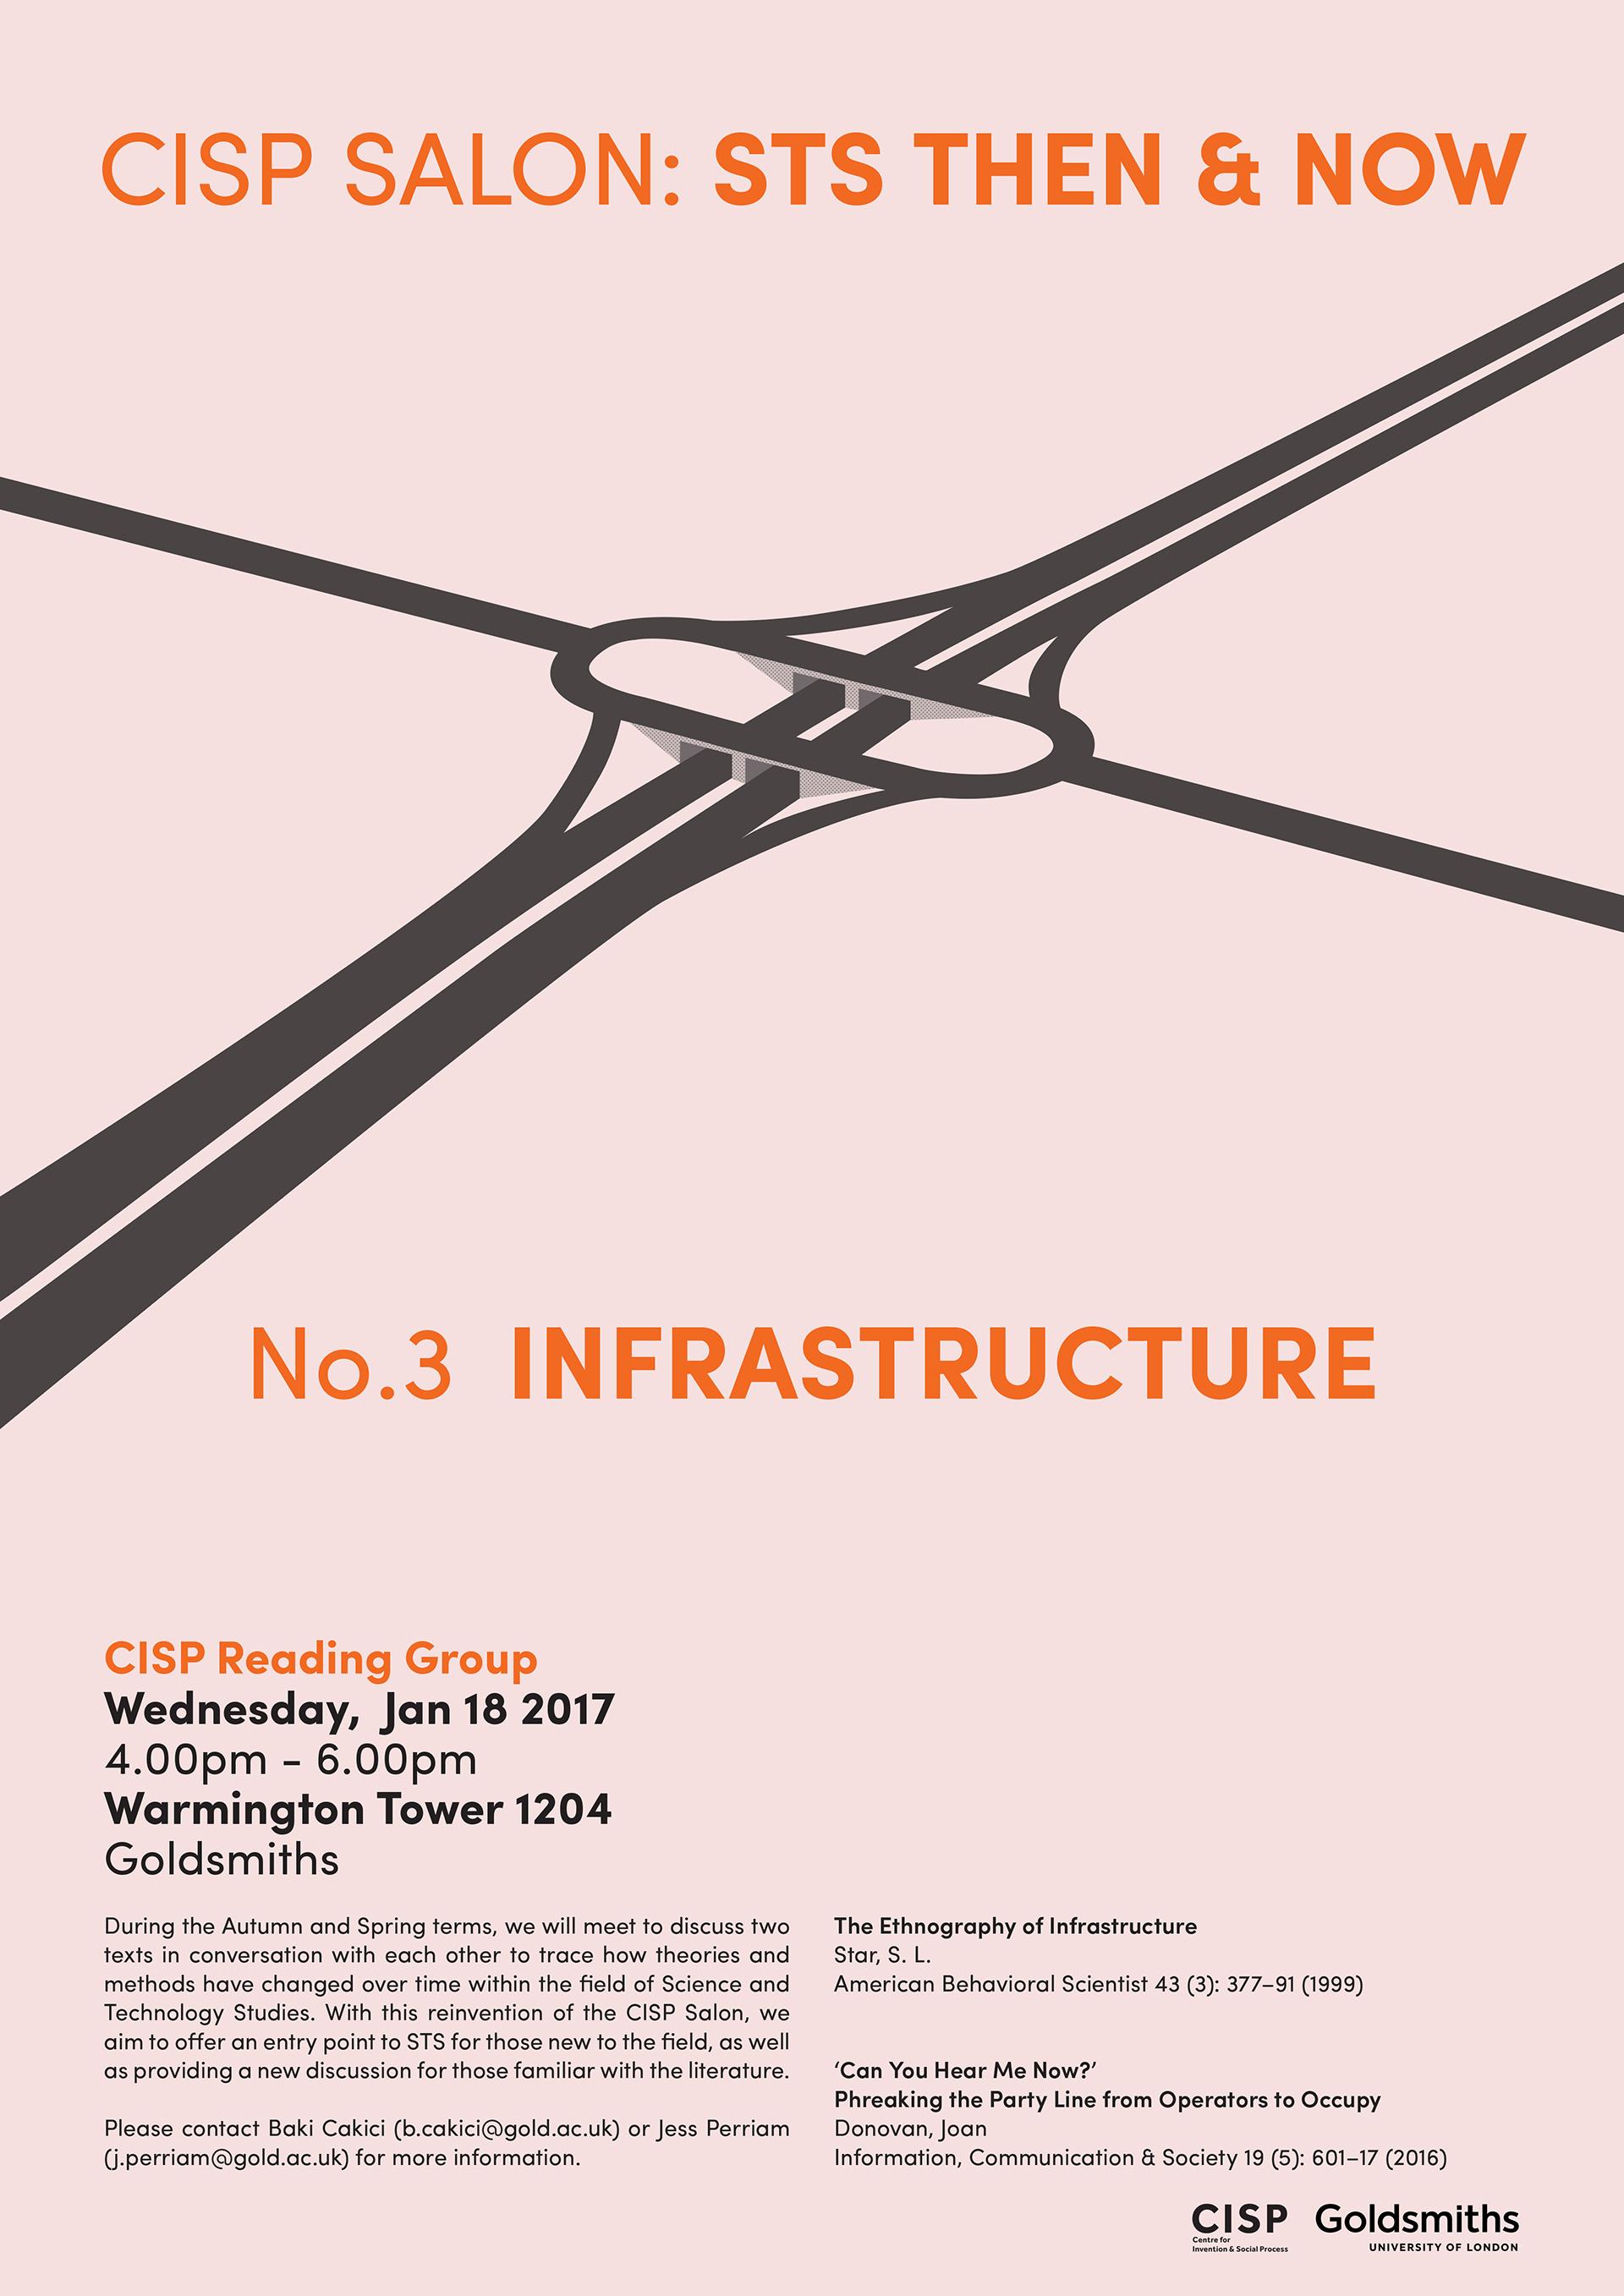 CISP Salon 2016/17: Infrastructure